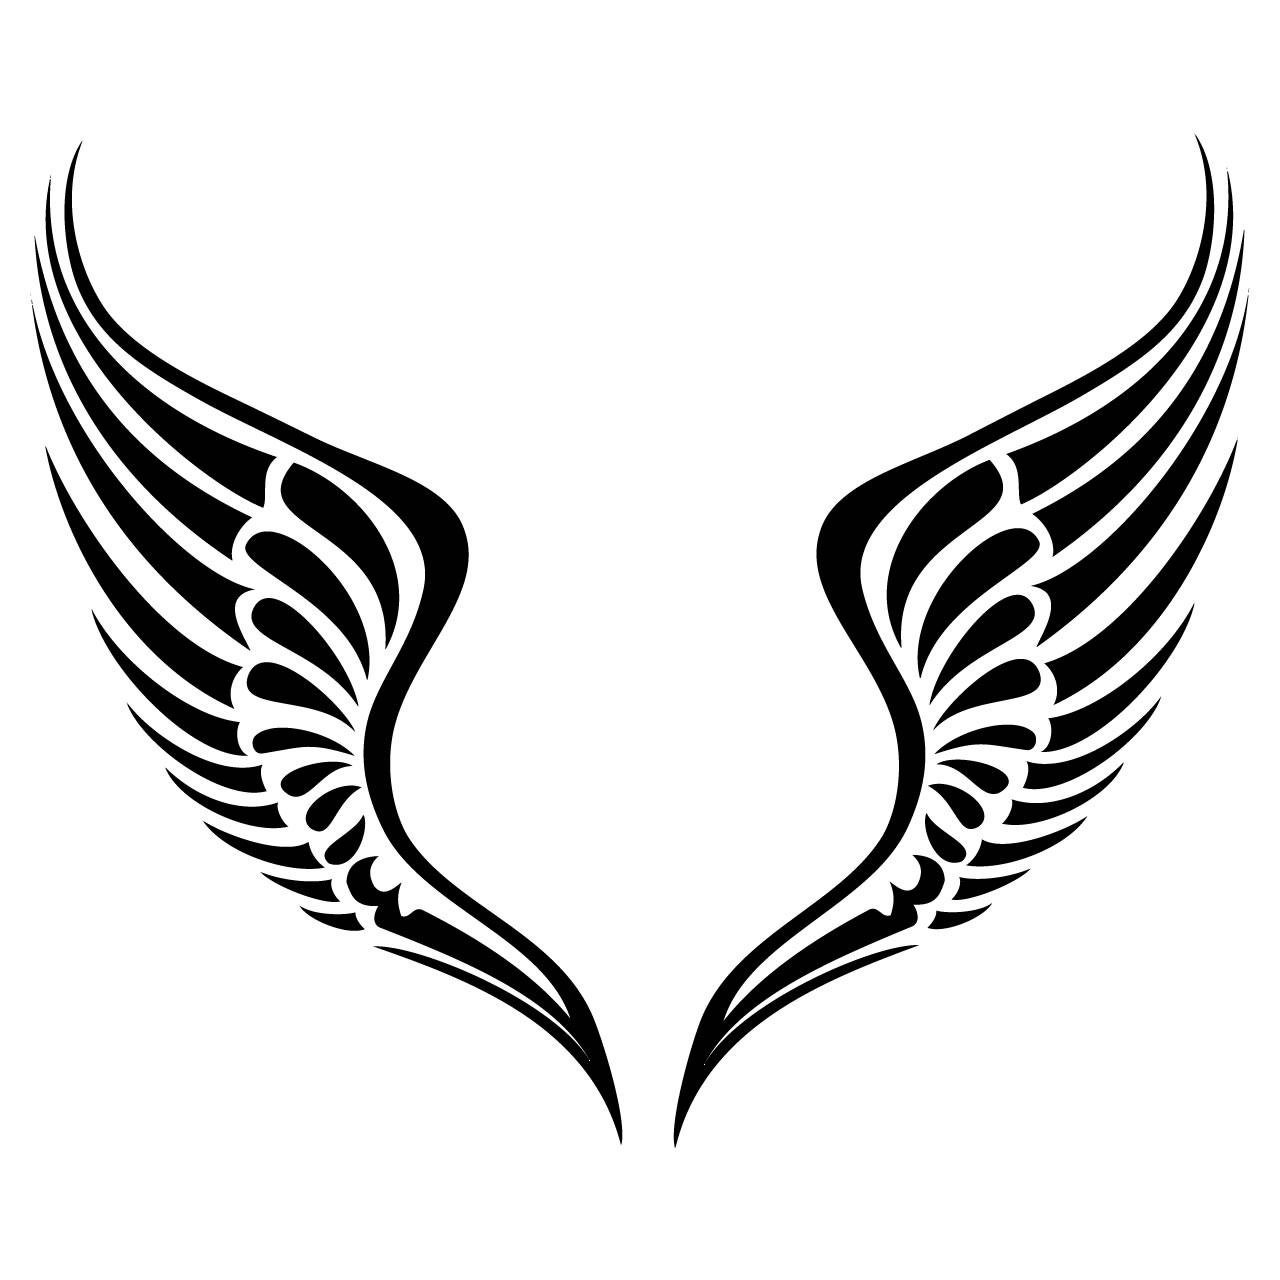 Tribal Cross Angel Wings Tattoo Graphic | Fresh 2017 Tattoos Ideas